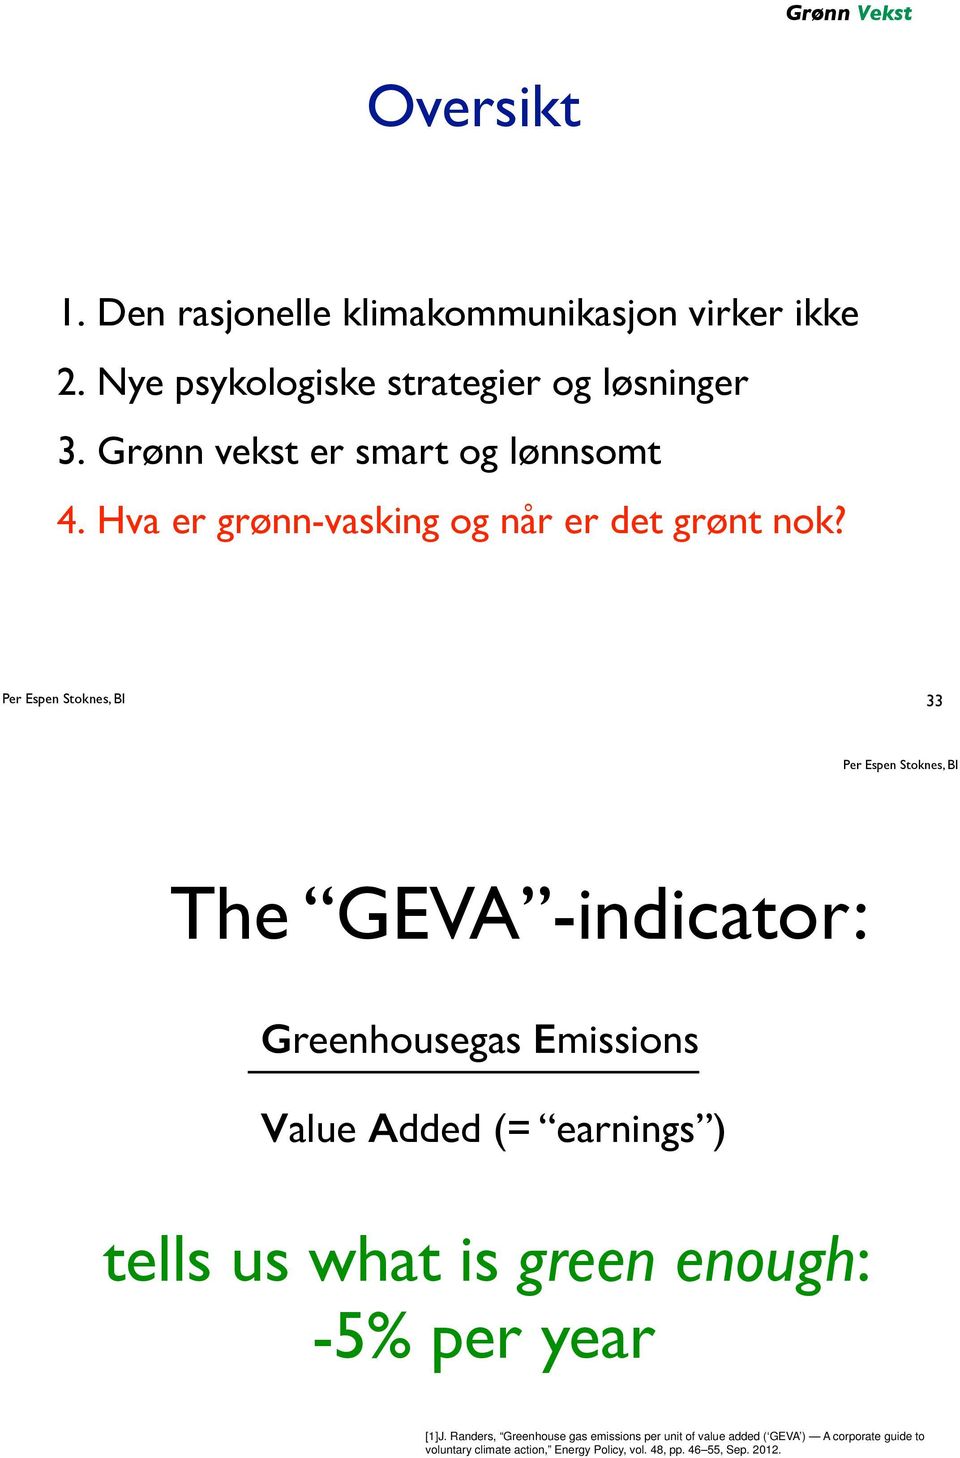 "33 The GEVA -indicator: Greenhousegas Emissions!